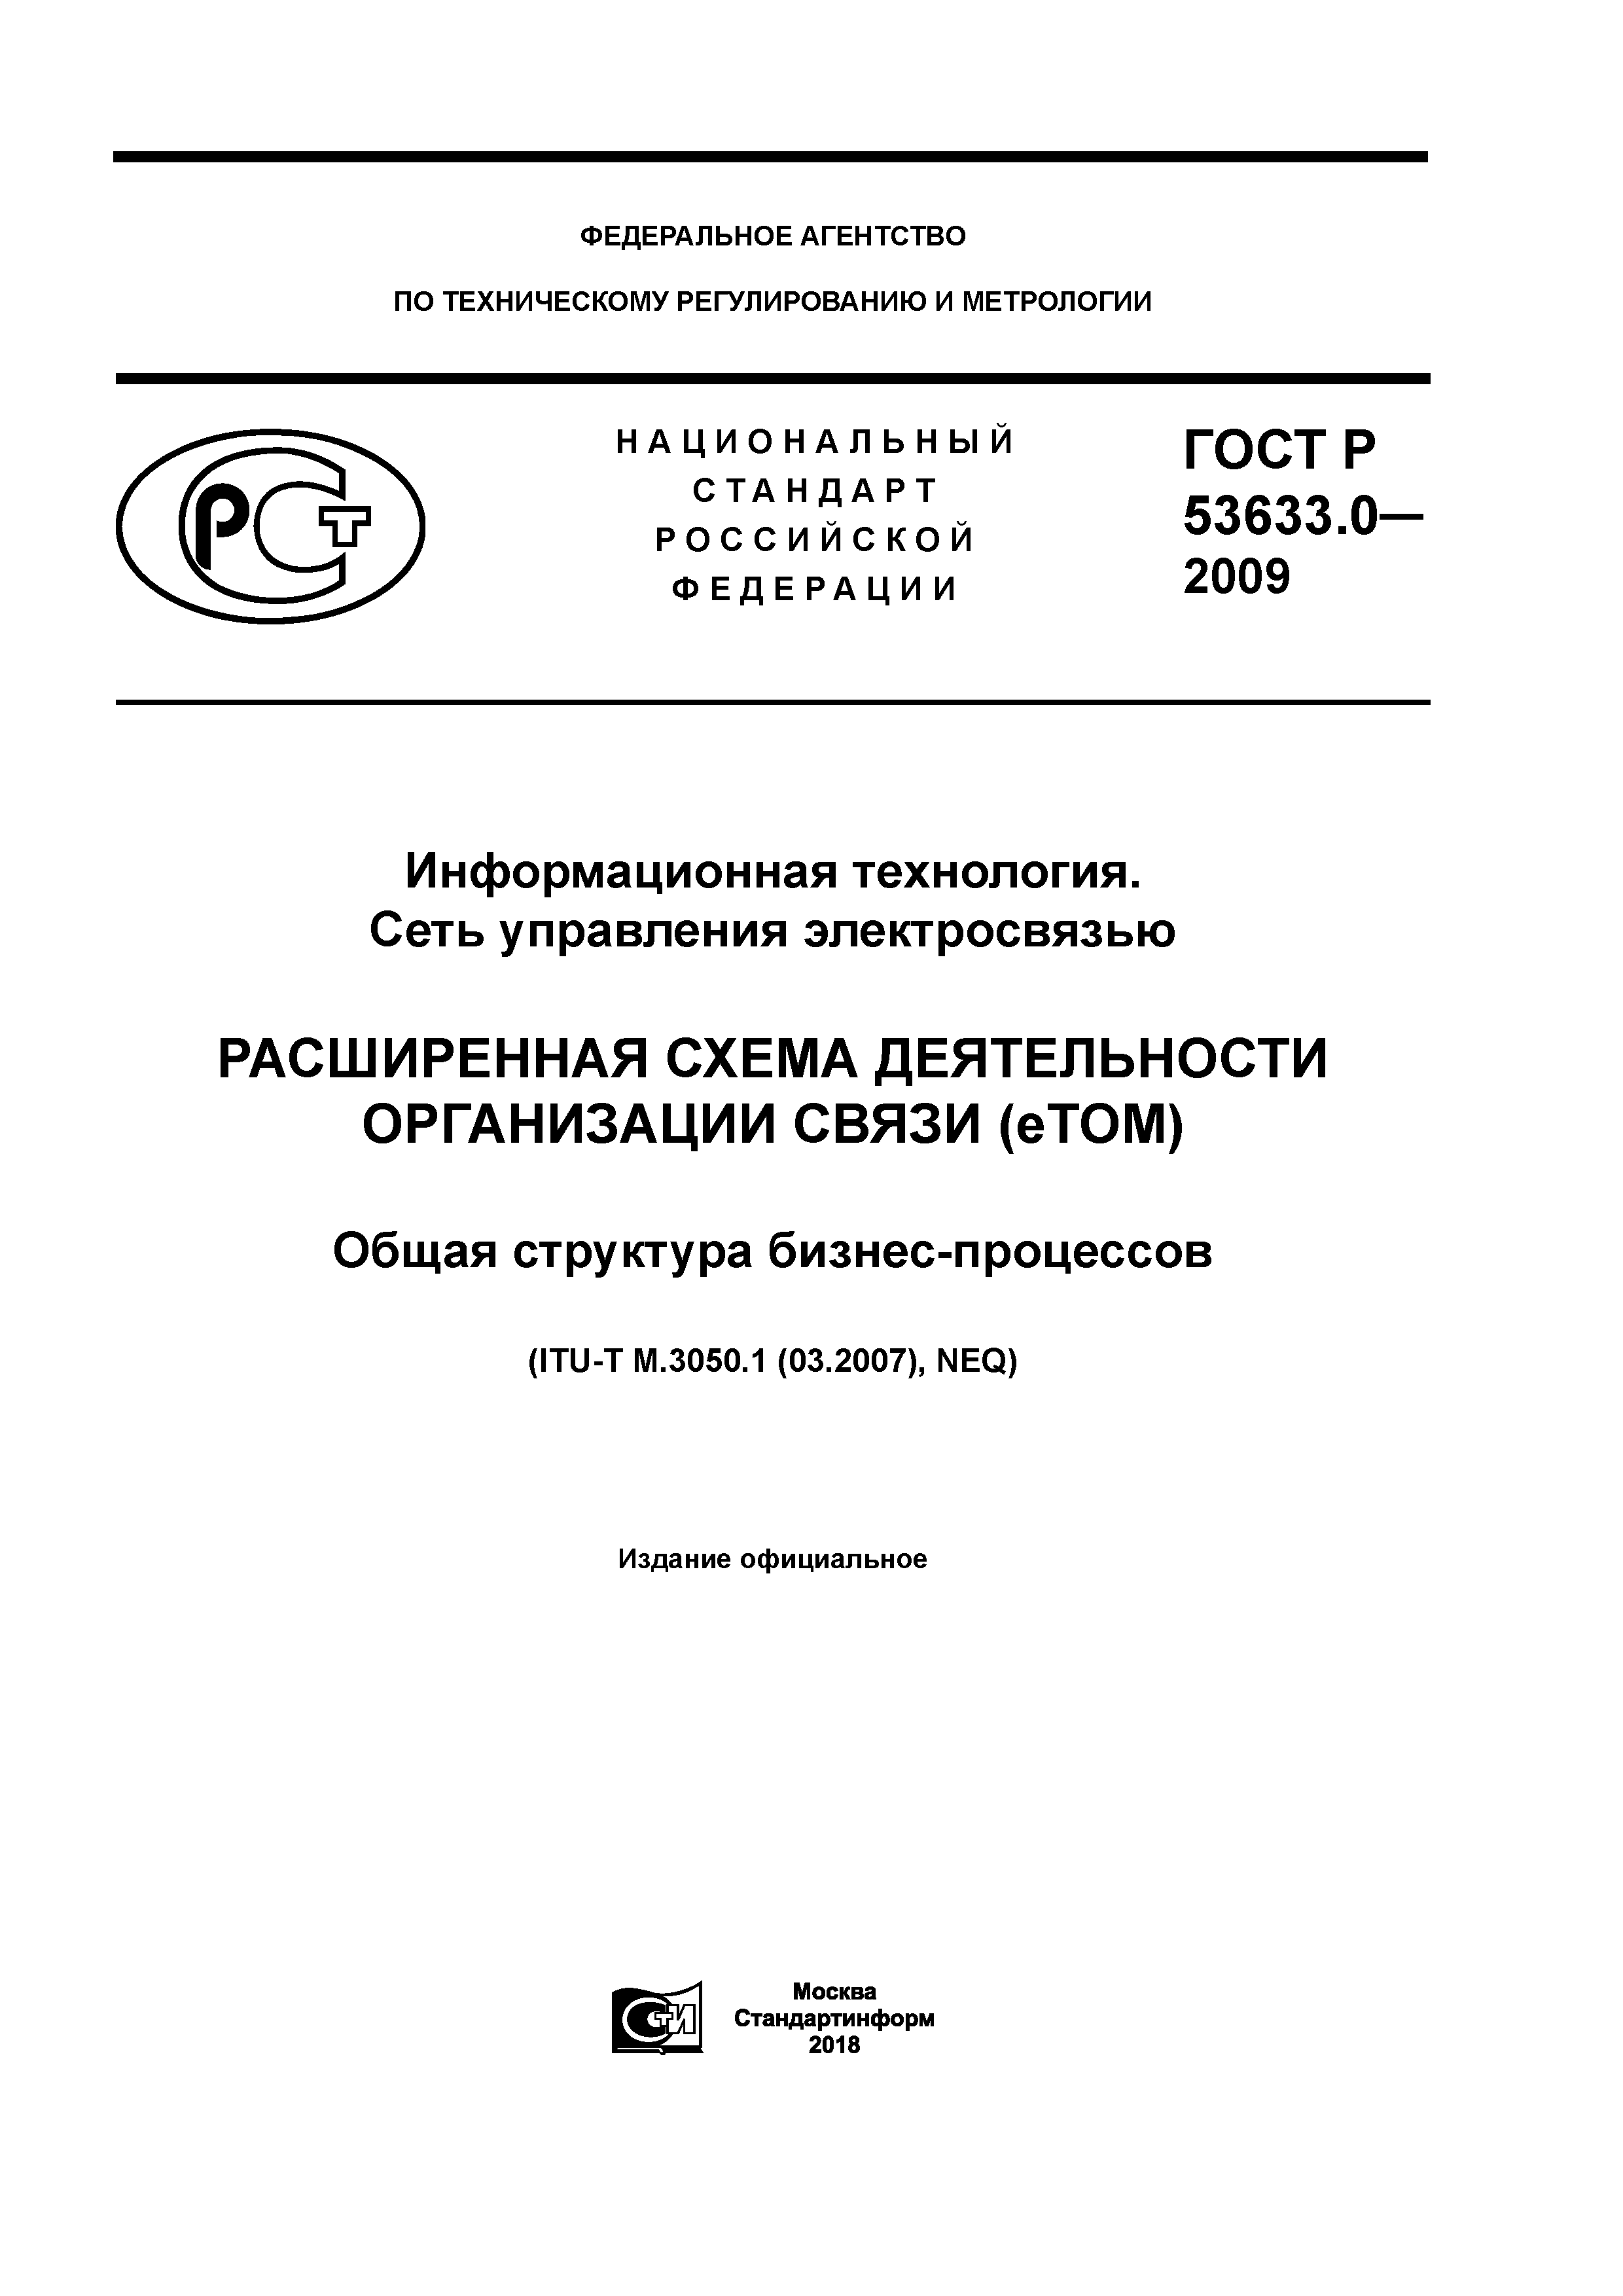 ГОСТ Р 53633.0-2009